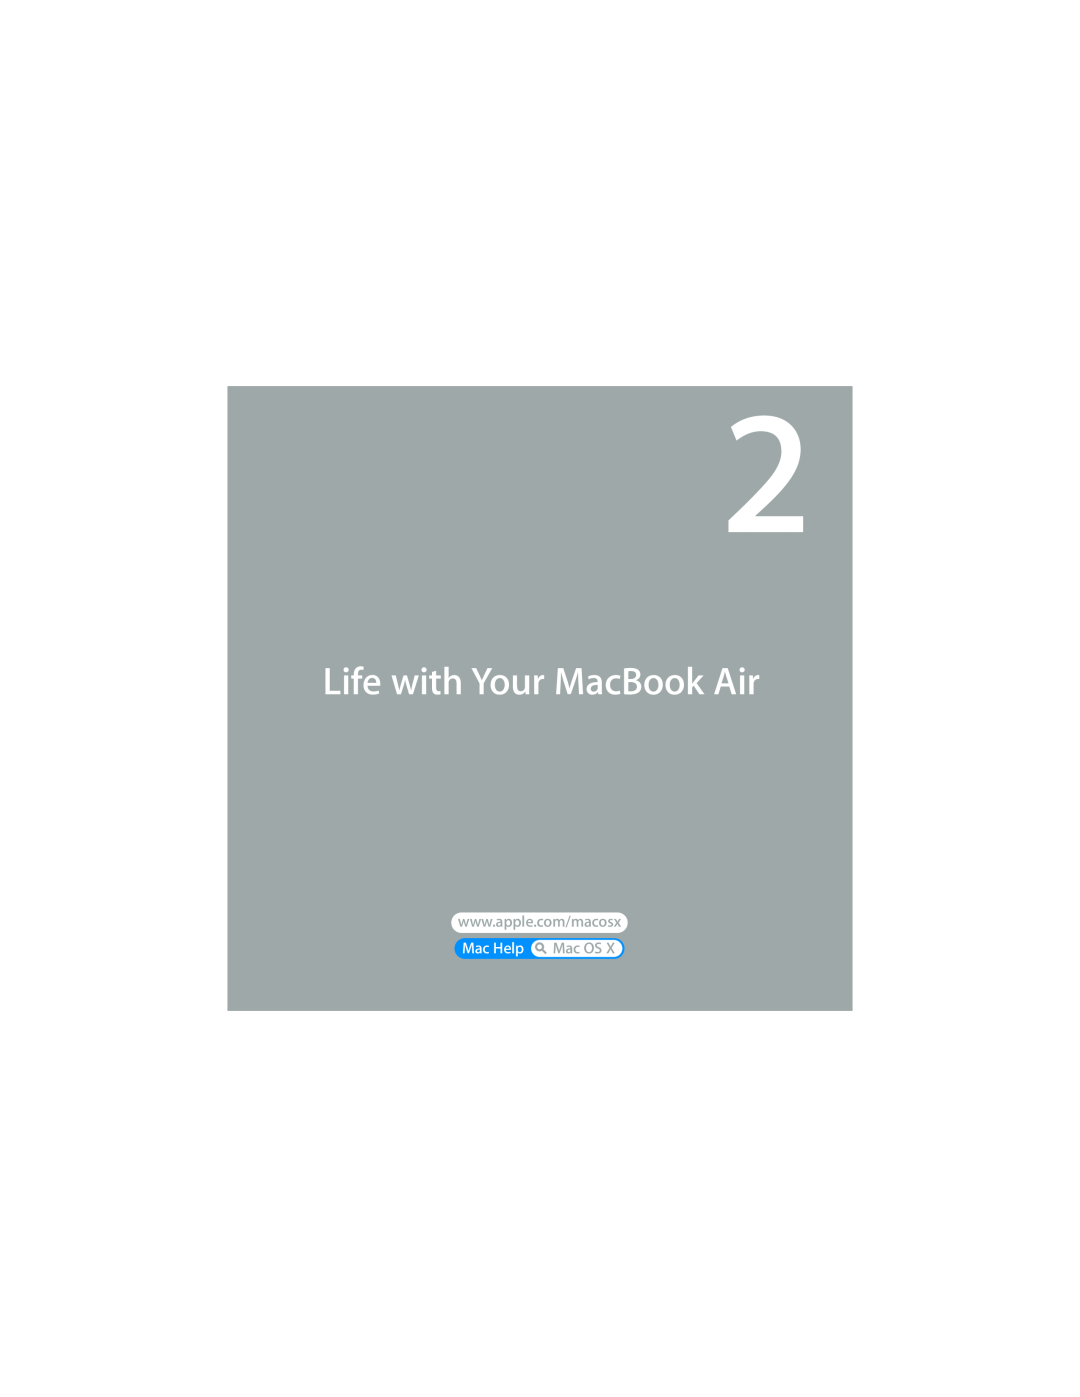 Apple MB003LL/A, MC233LL/A manual Life with Your MacBook Air, Mac Help Mac OS 